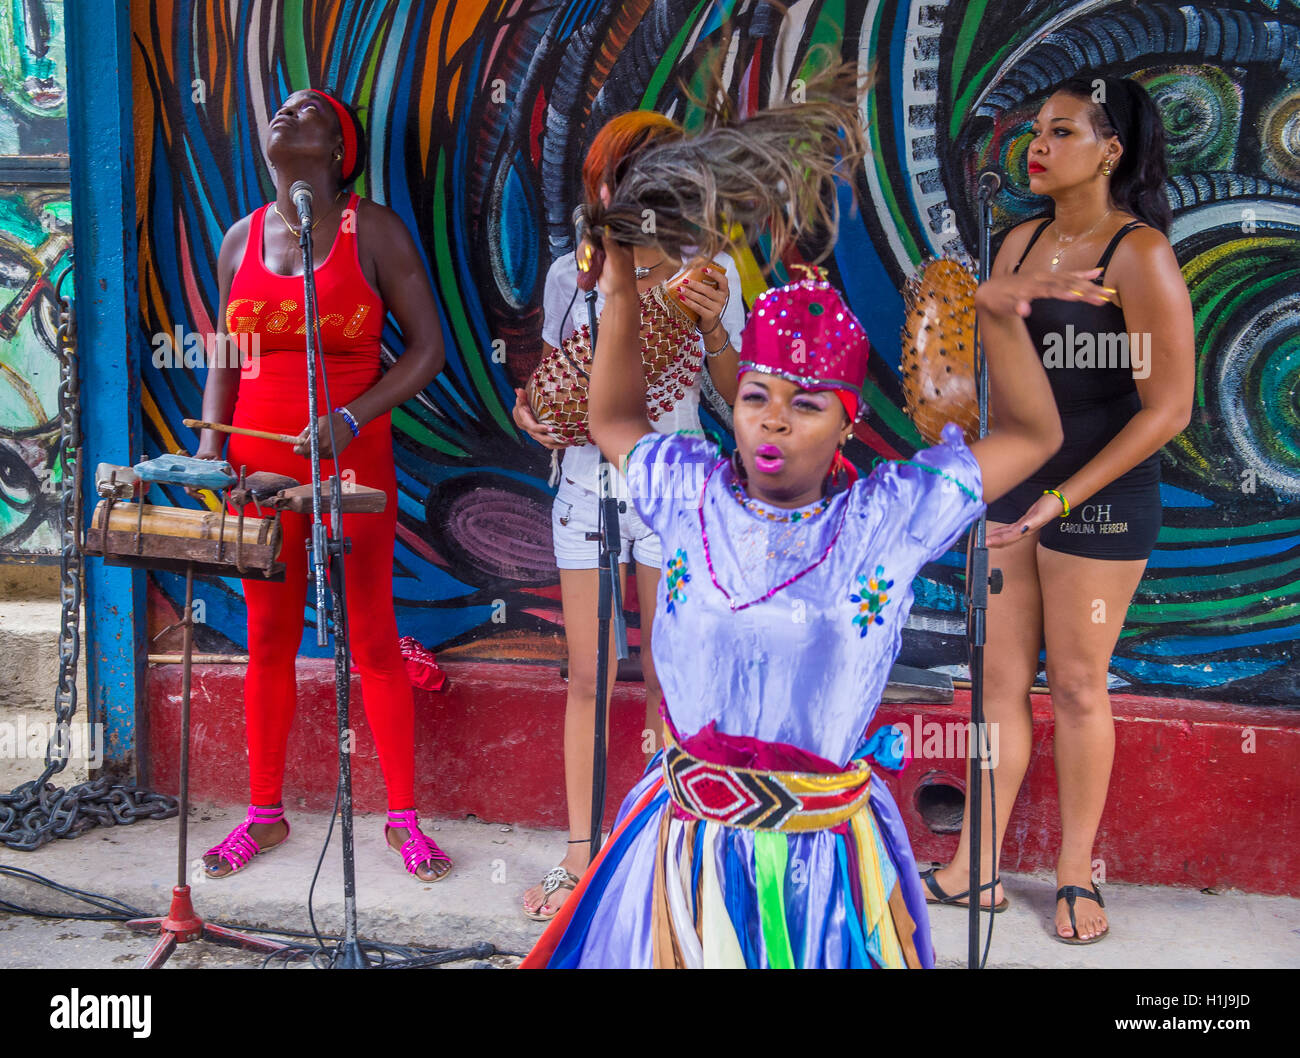 Kuba salsa -Fotos und -Bildmaterial in hoher Auflösung – Alamy